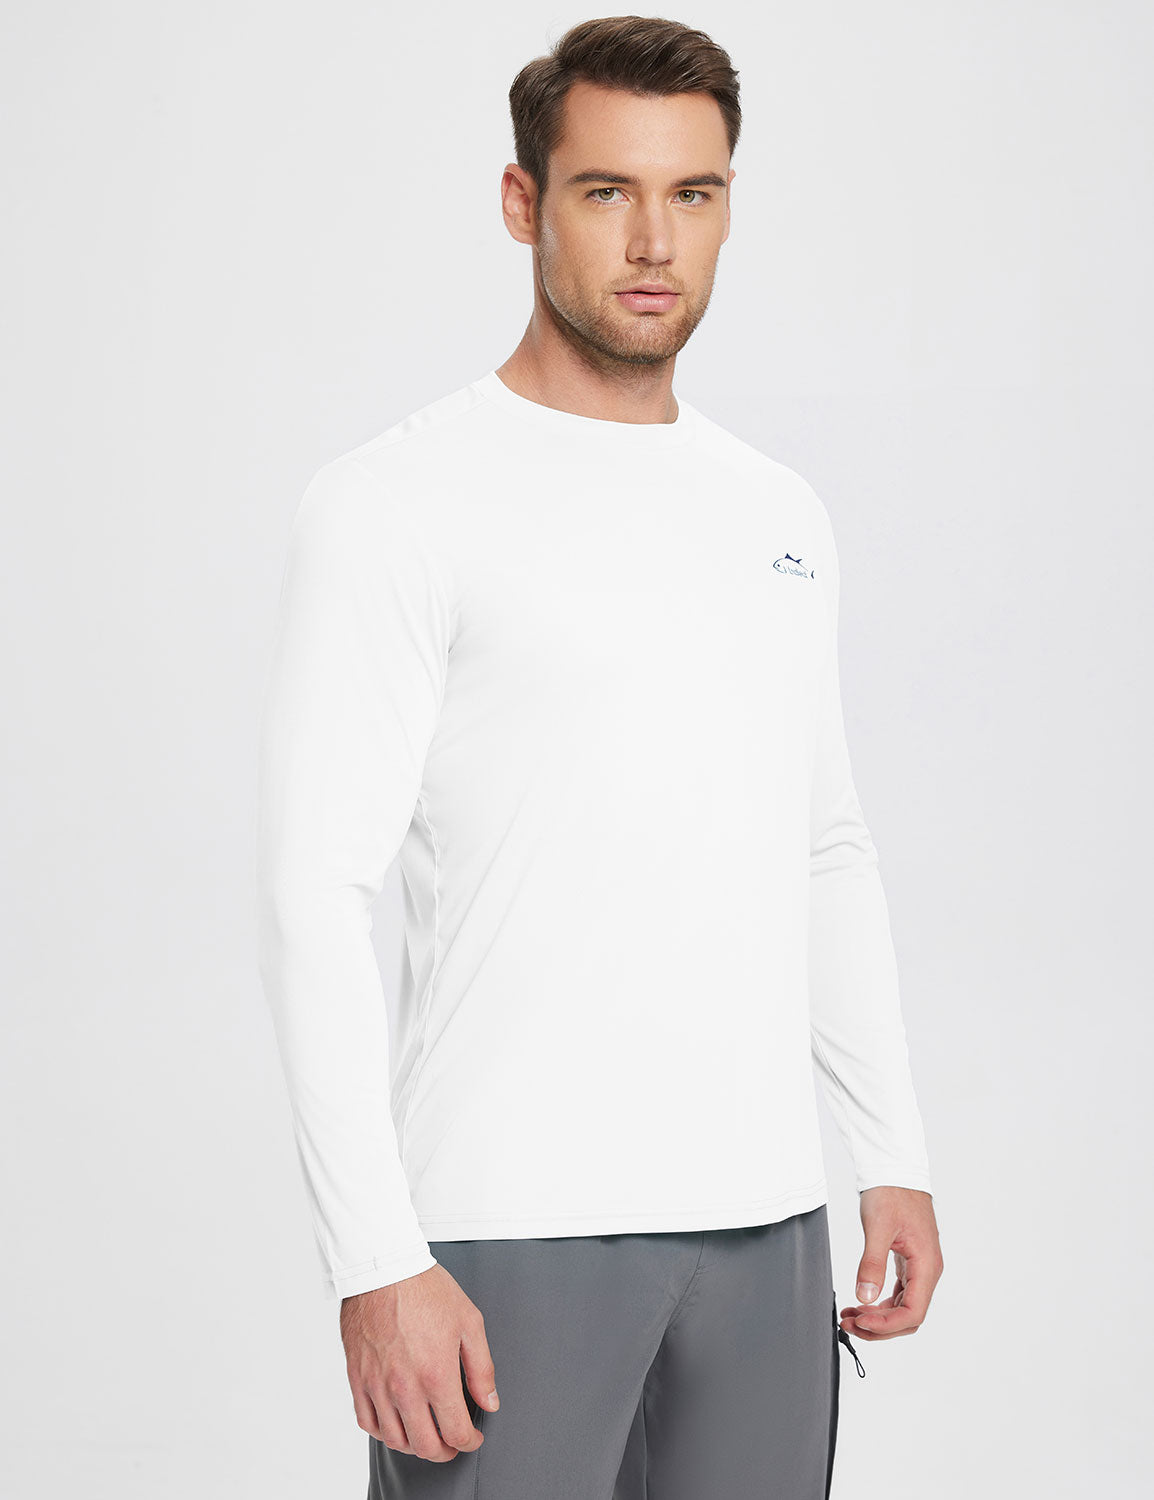 Men Fishing Shirts Men Performance Fishing Shirt Long Sleeve UPF50+  Breathable Quick-Dry Moisture Outdoor T-Shirt USA Size S-4XL